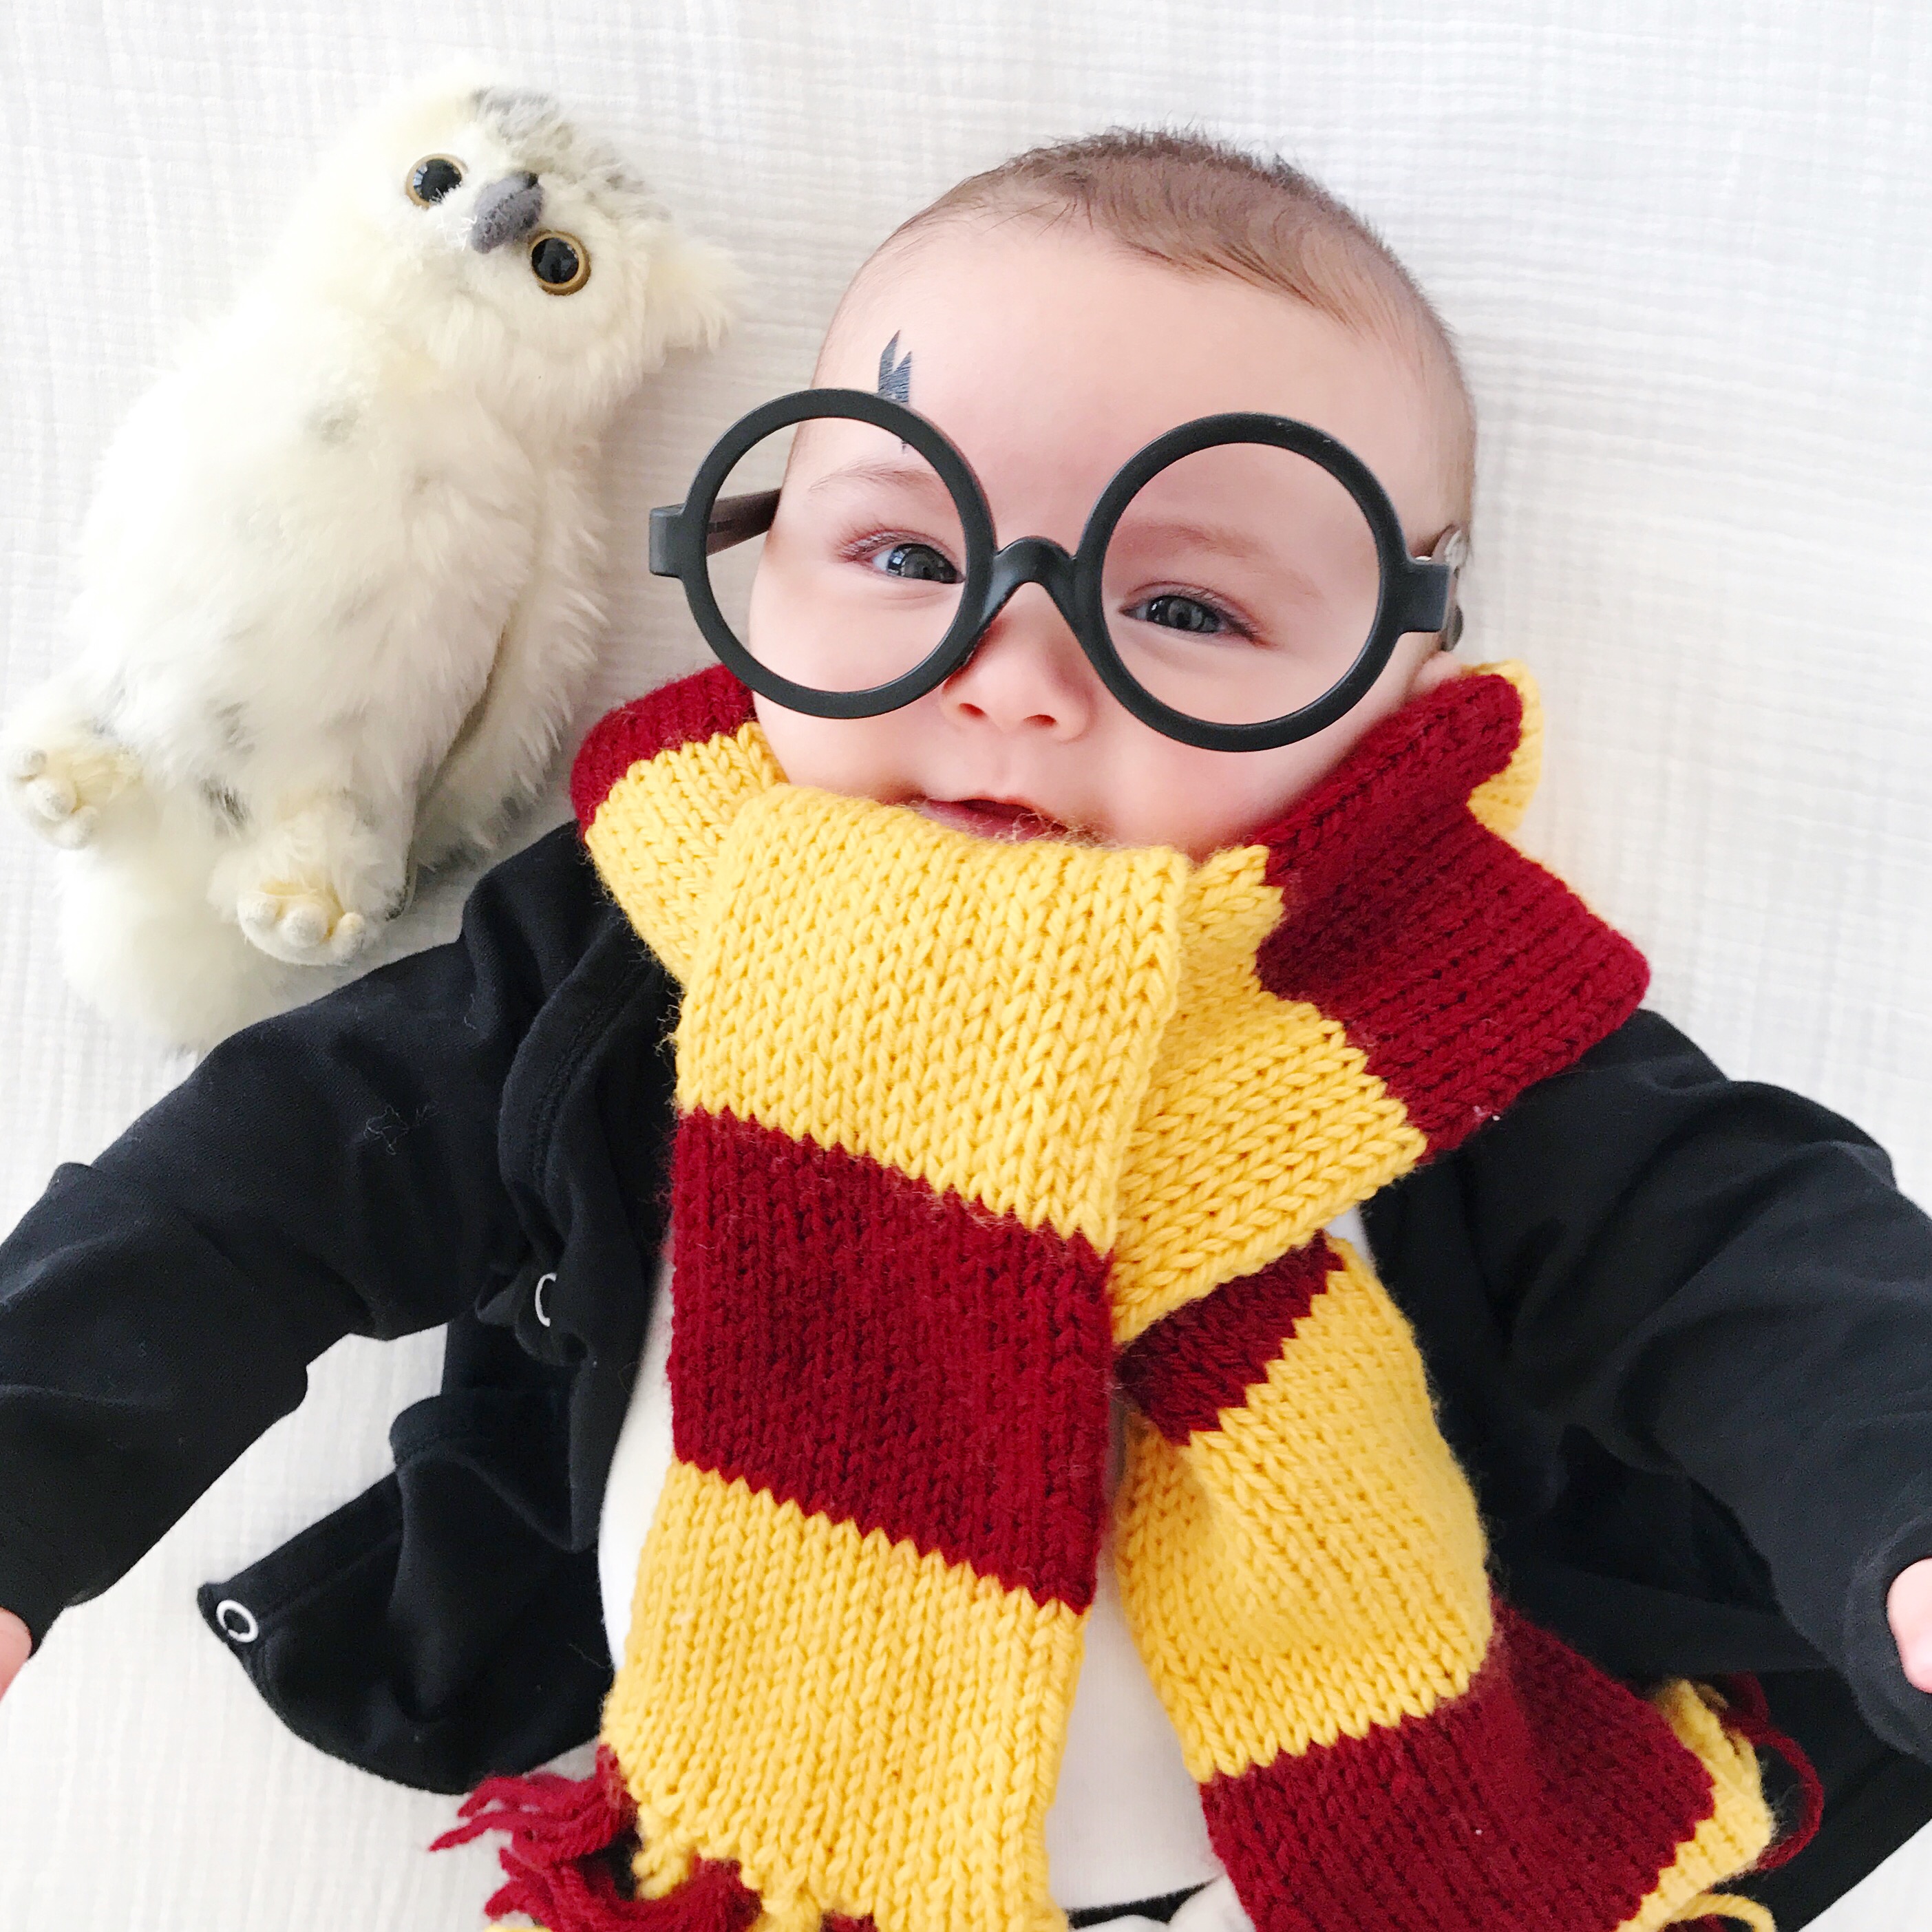 Harry Potter Infant Costume Halloween Baby  Baby harry potter costume,  Toddler harry potter costume, Baby halloween costumes for boys